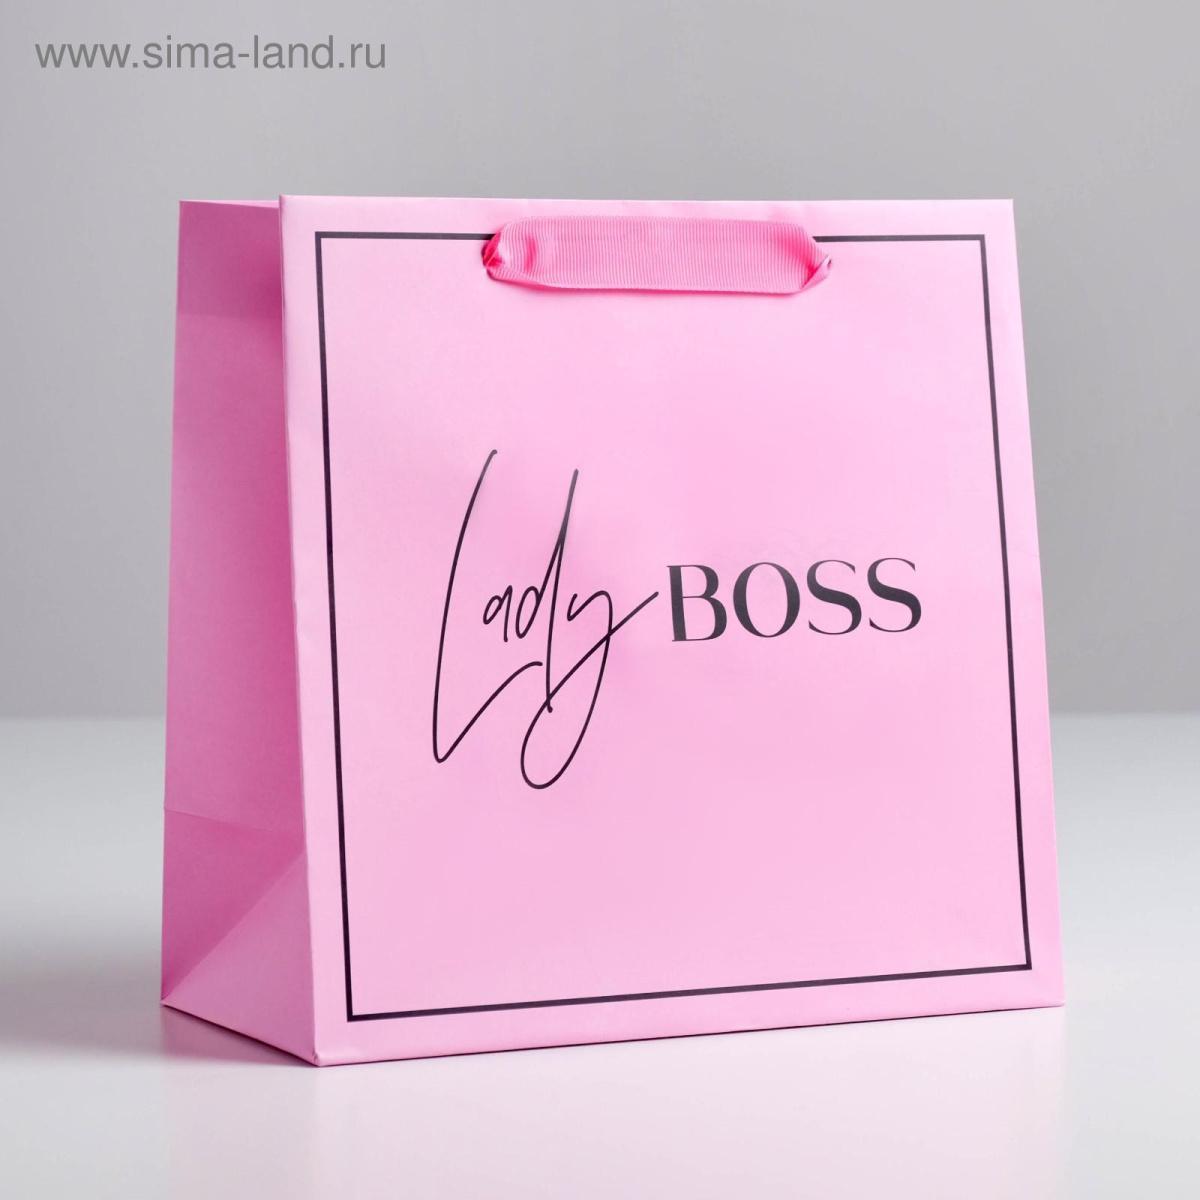 Пакет ламинированный квадратный "Lady Boss" 22 х 22 х 11 см